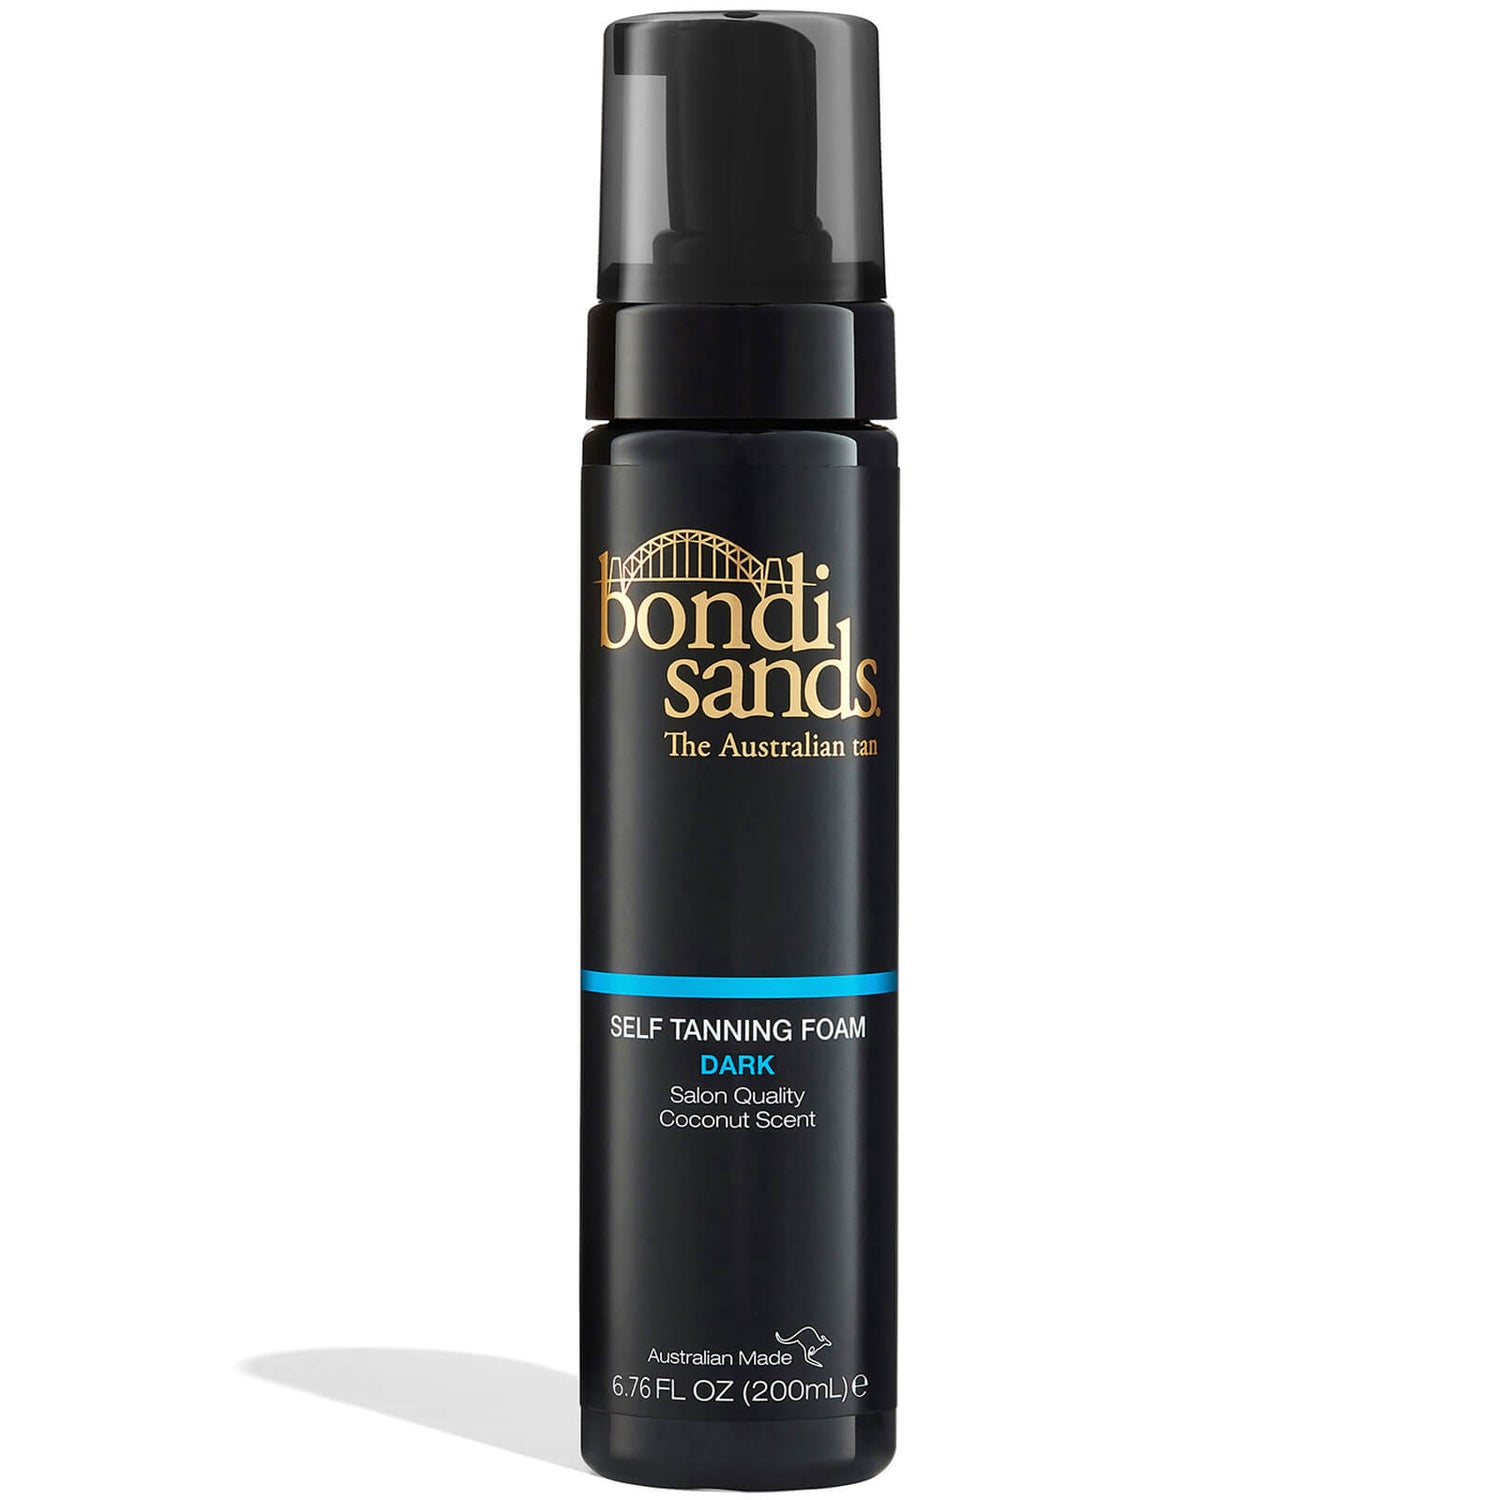 Bondi Sands Self Tanning Foam 200 ml – Dark